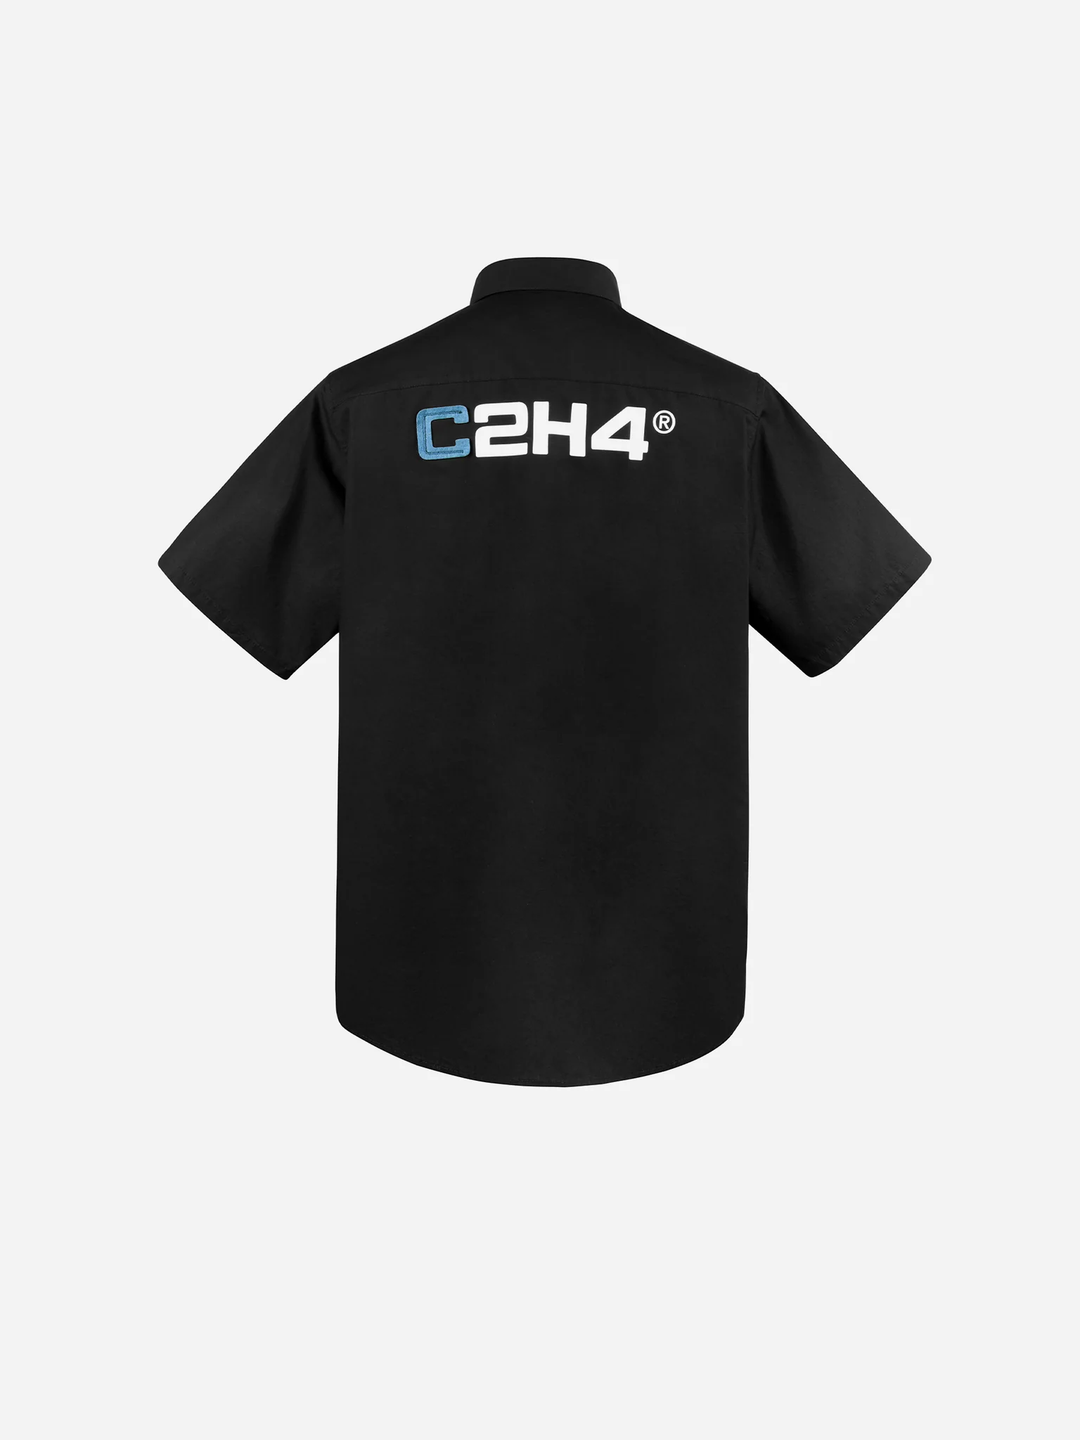 C2H4 Staff Uniform Logo Shirt